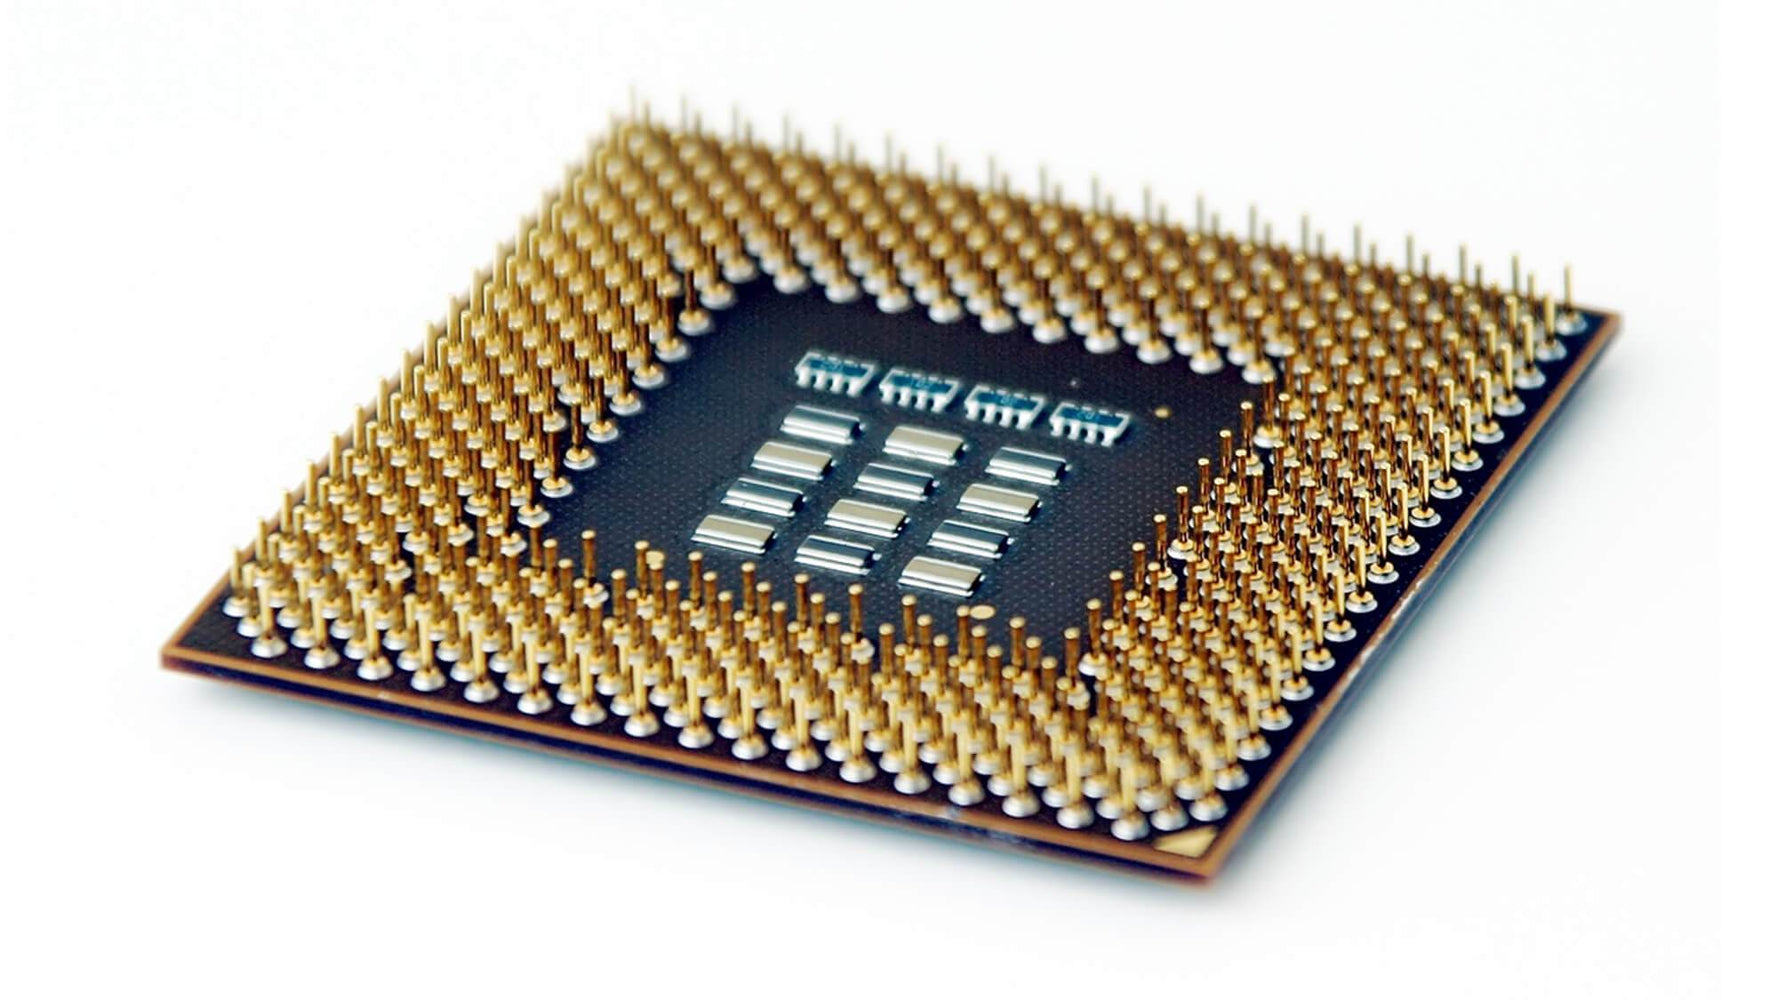 BX80623E31230 - Intel Xeon E3-1230 Quad Core 3.20GHz 5.00GT/s DMI 8MB L3 Cache Socket LGA1155 Processor